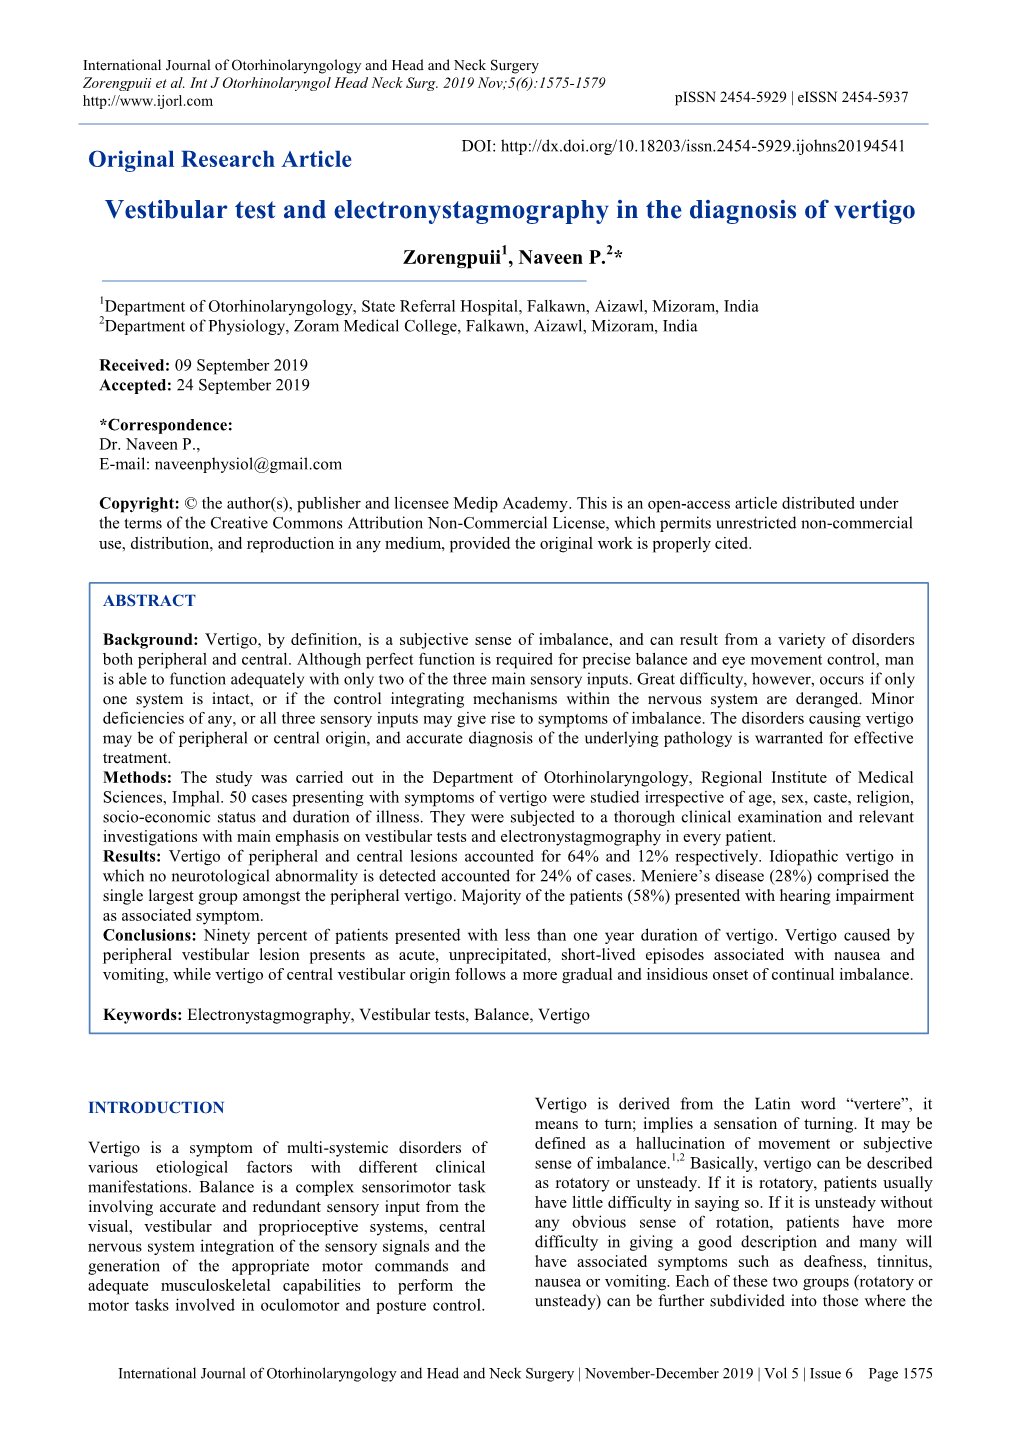 Original Research Article Vestibular Test and Electronystagmography in the Diagnosis of Vertigo